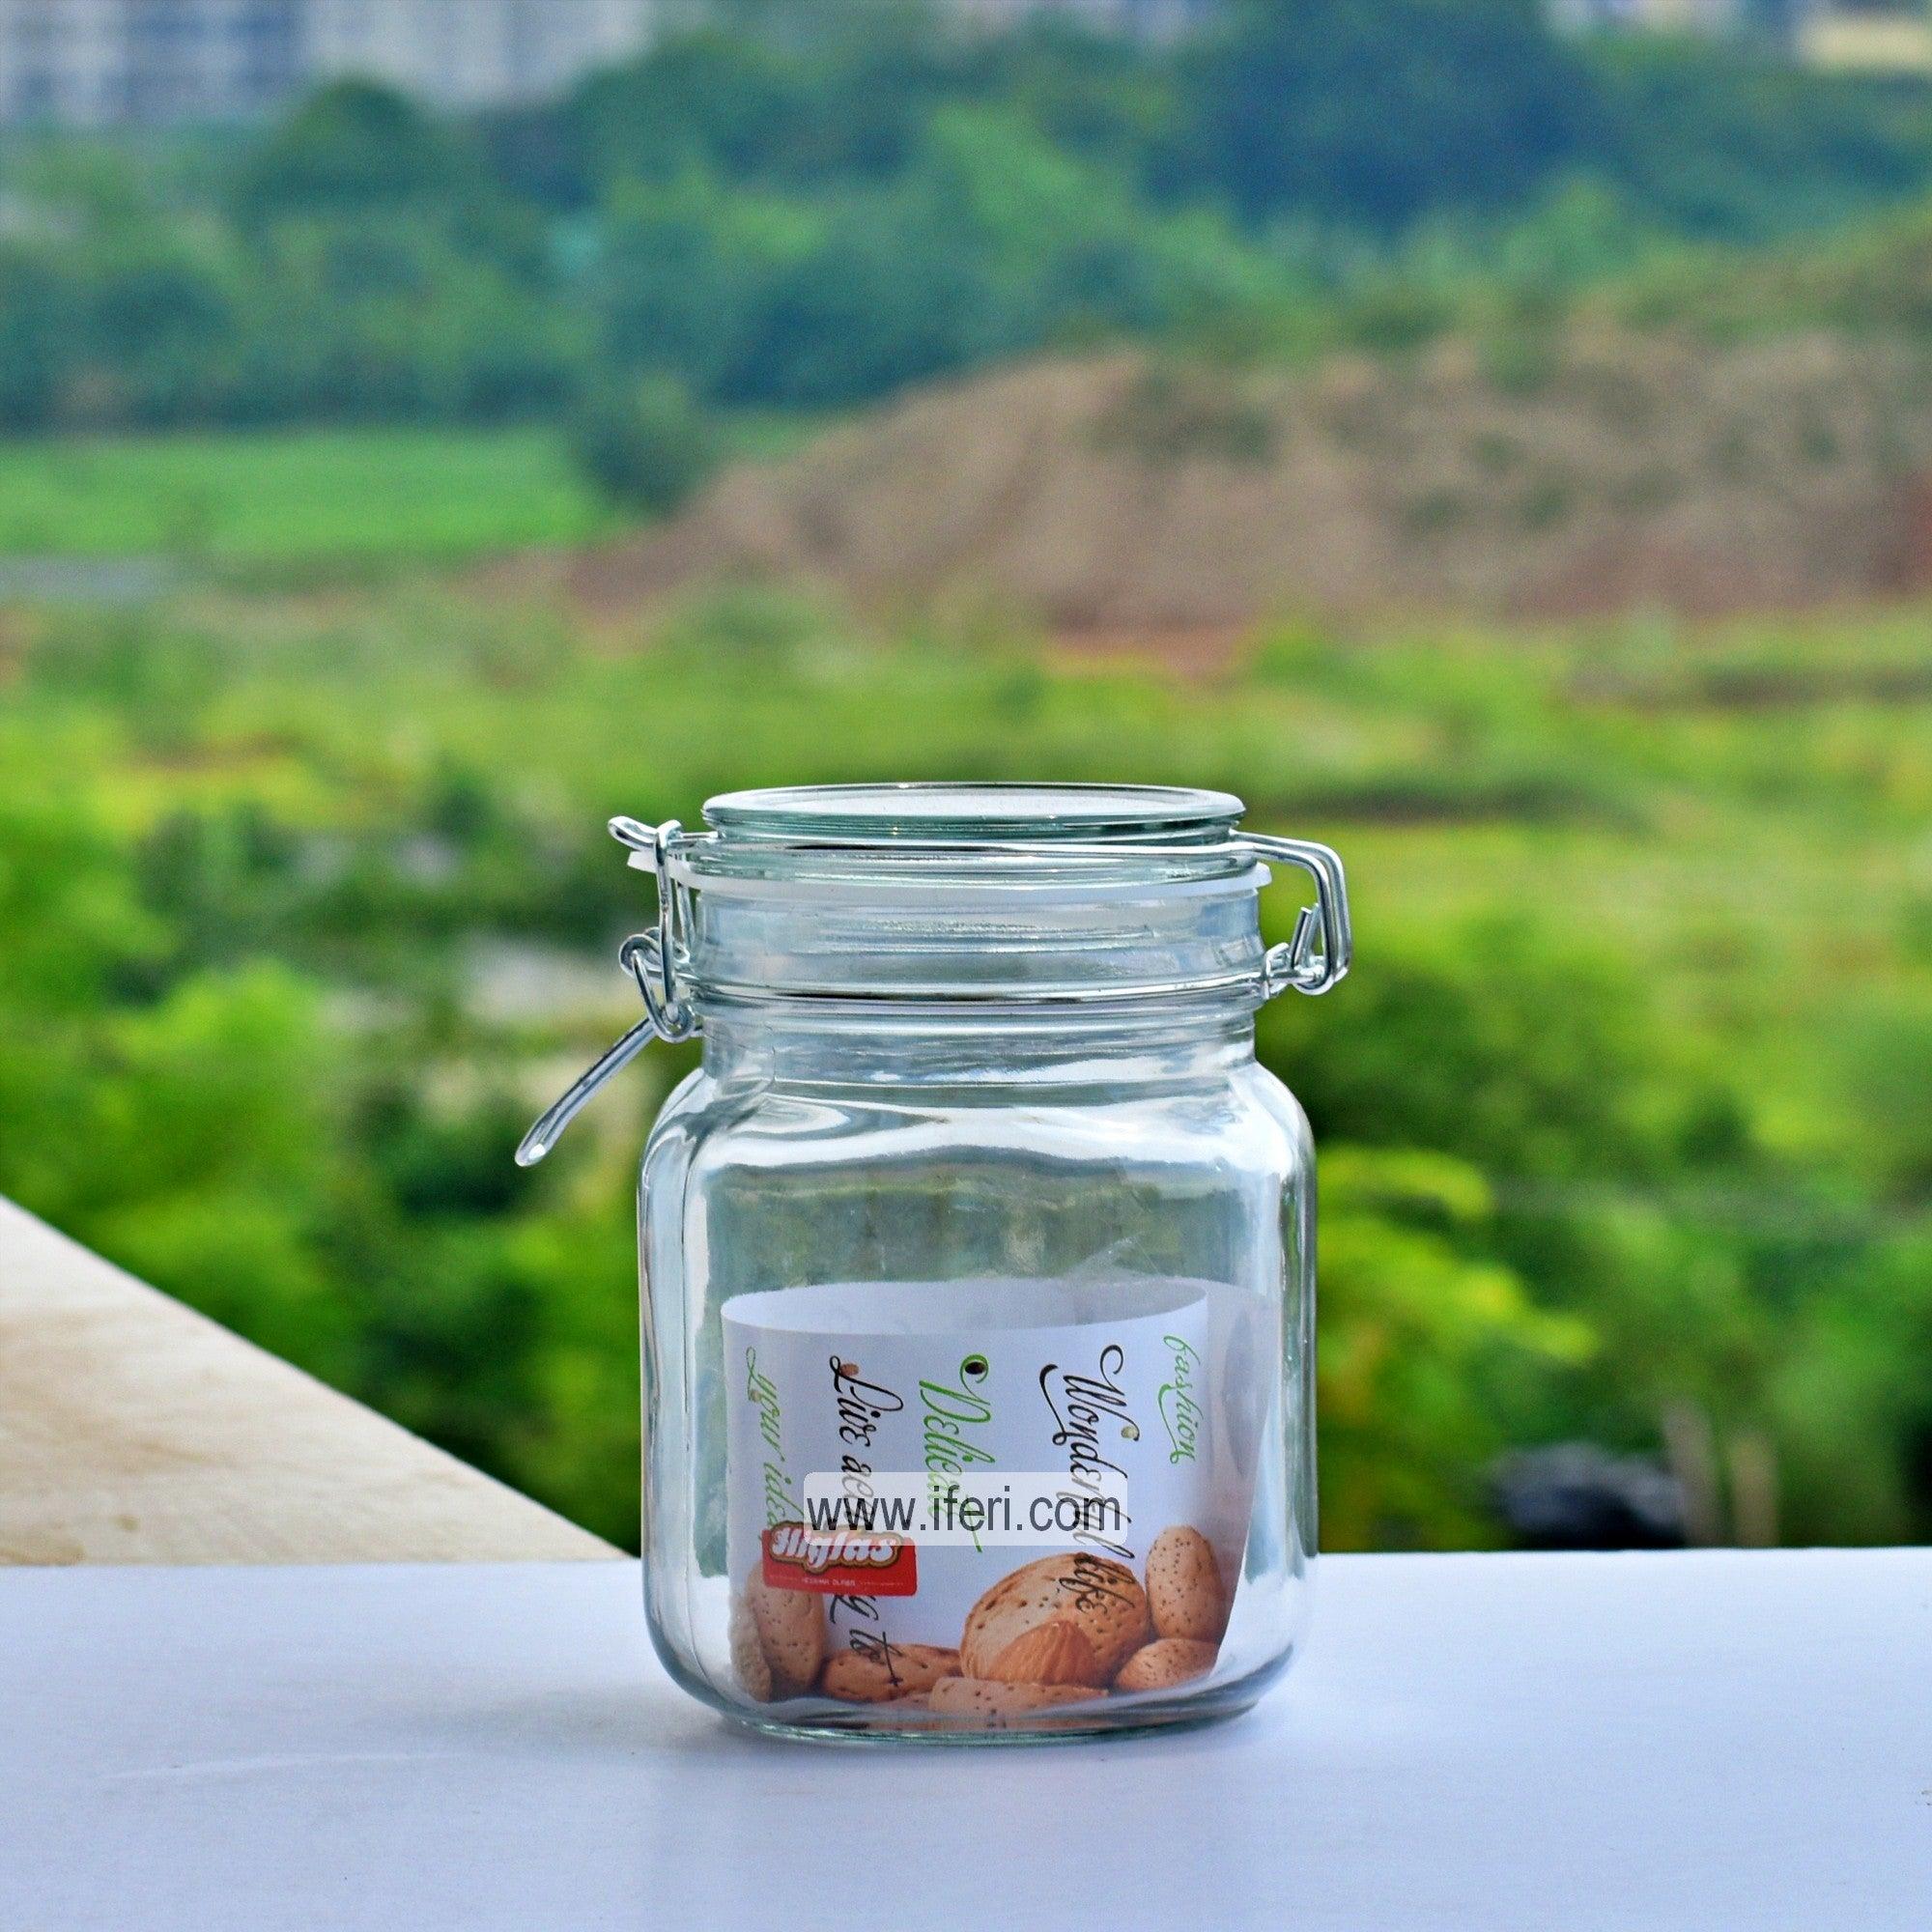 1000ml Food Grade Airtight Glass Jar UT21061 Price in Bangladesh - iferi.com